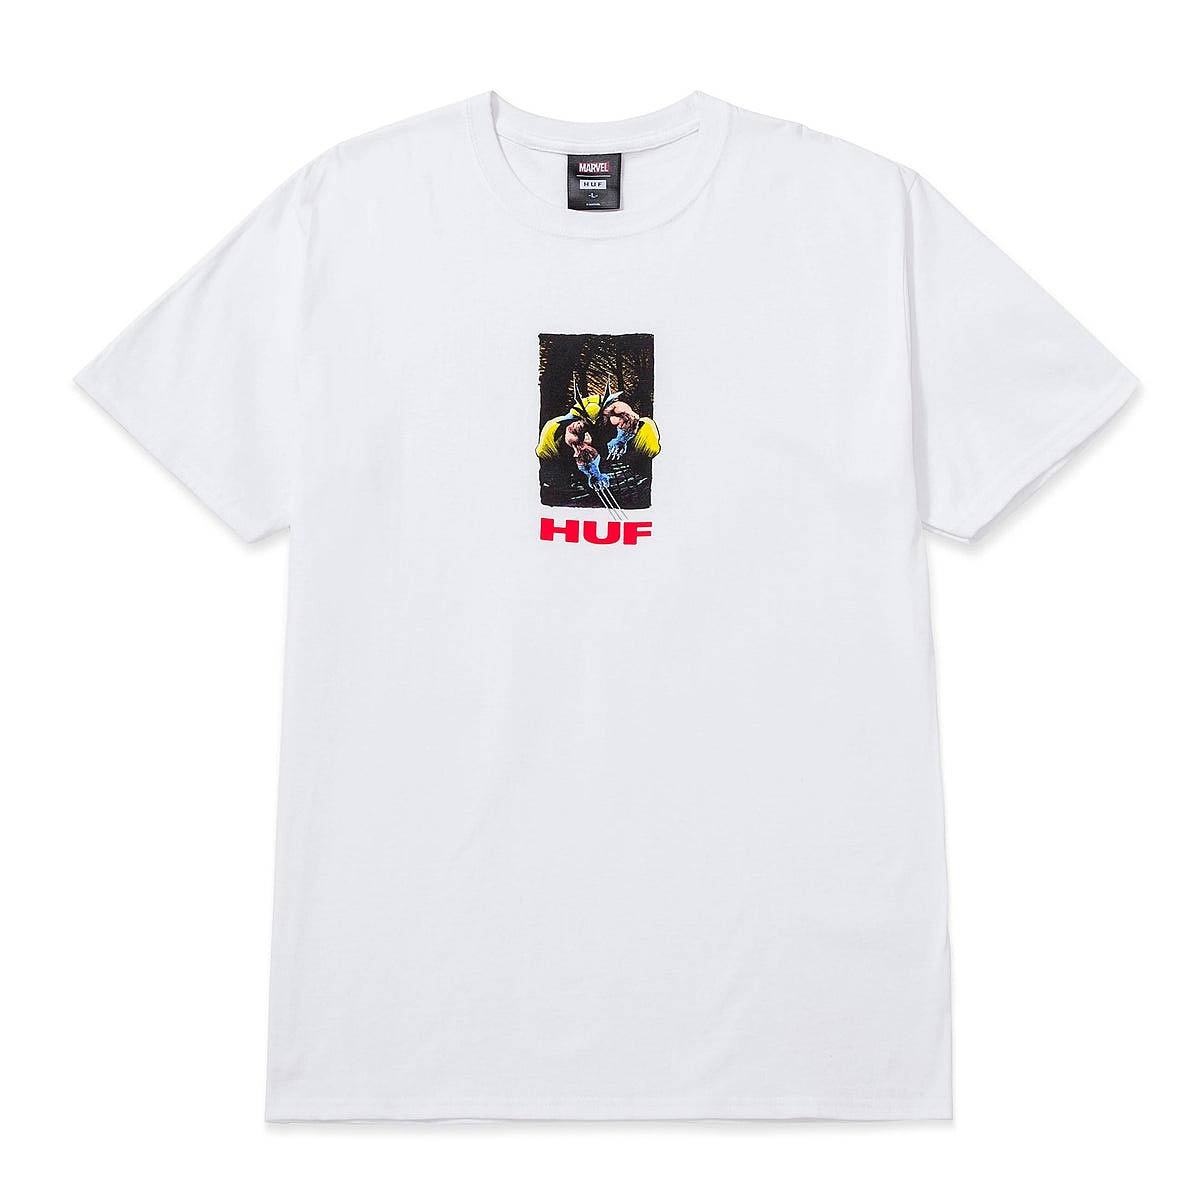 Huf Wolverine T-Shirt, White